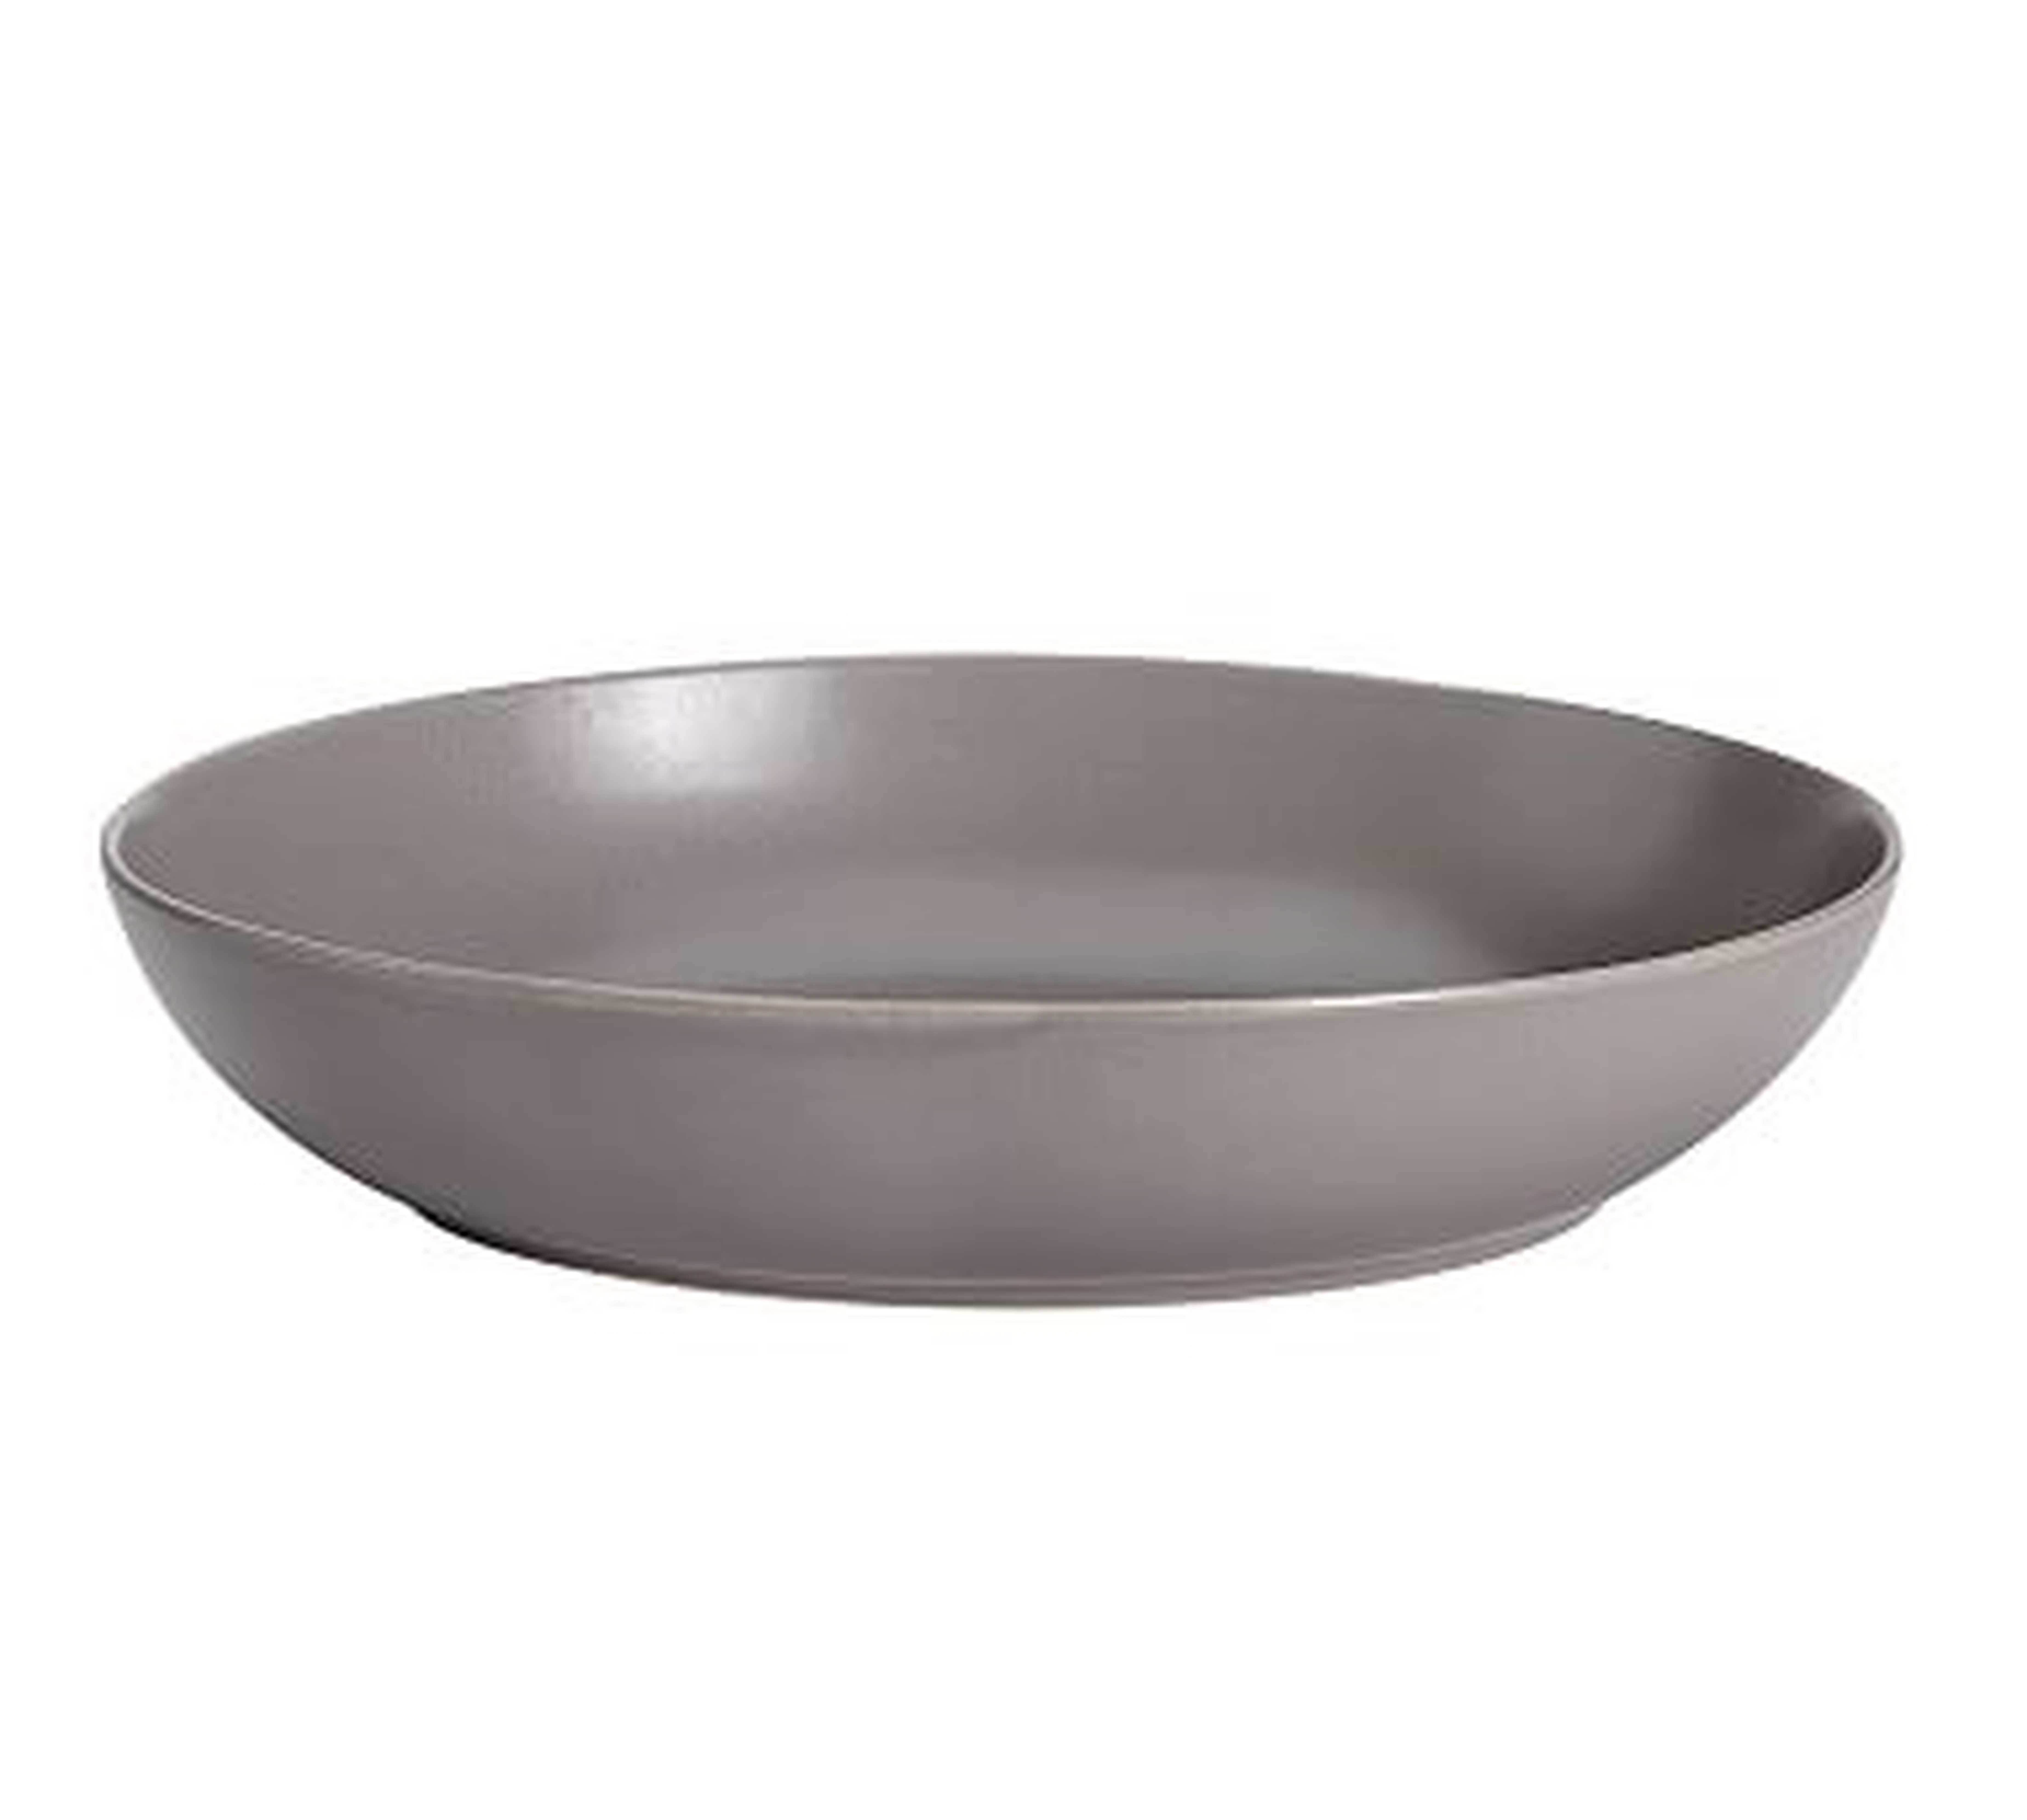 Mason Serve Bowl, Large - Graphite Grey, Each - Pottery Barn